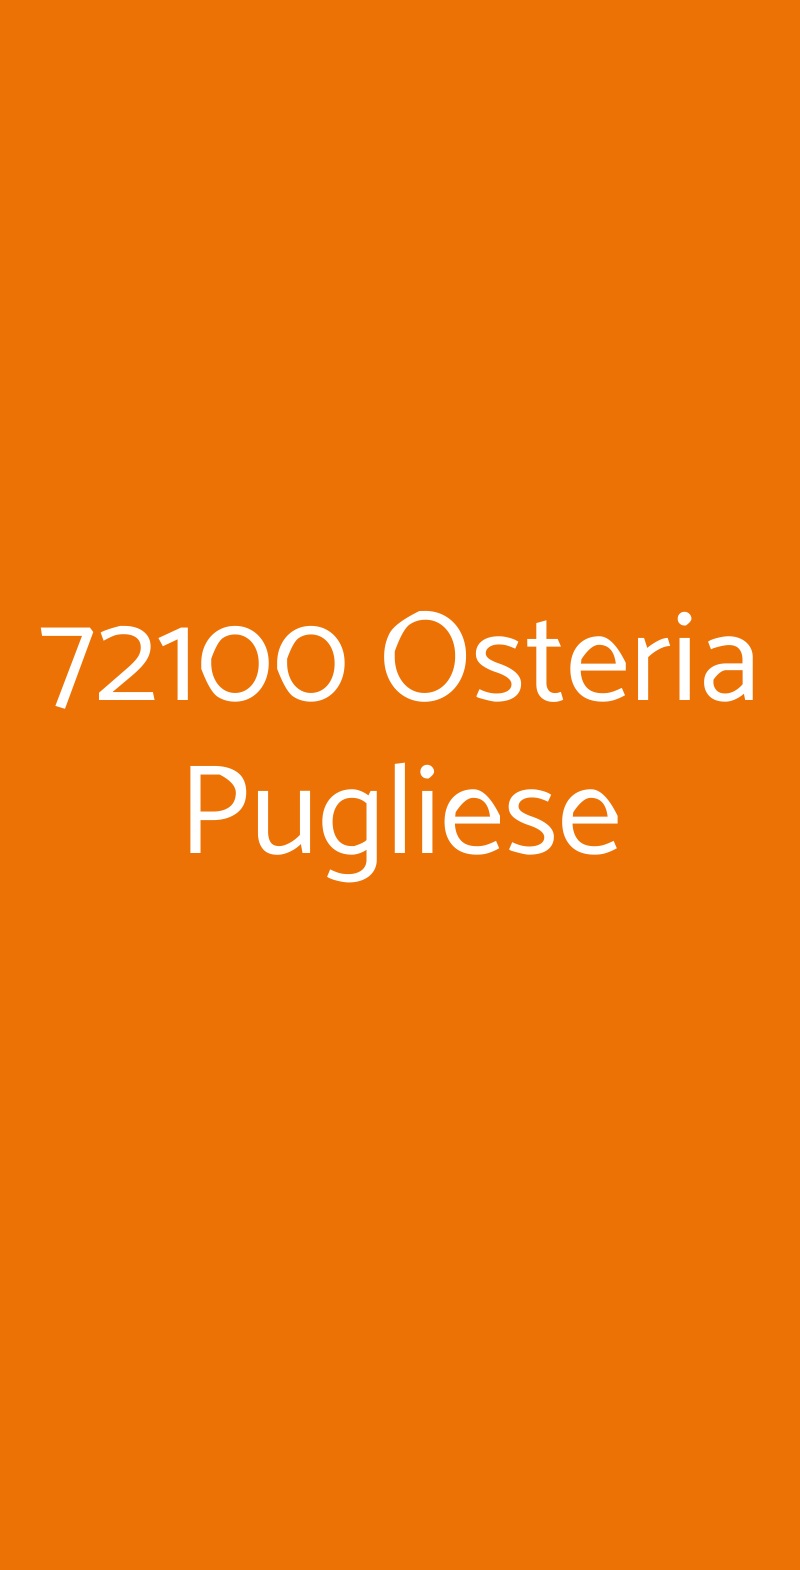 72100 Osteria Pugliese Milano menù 1 pagina